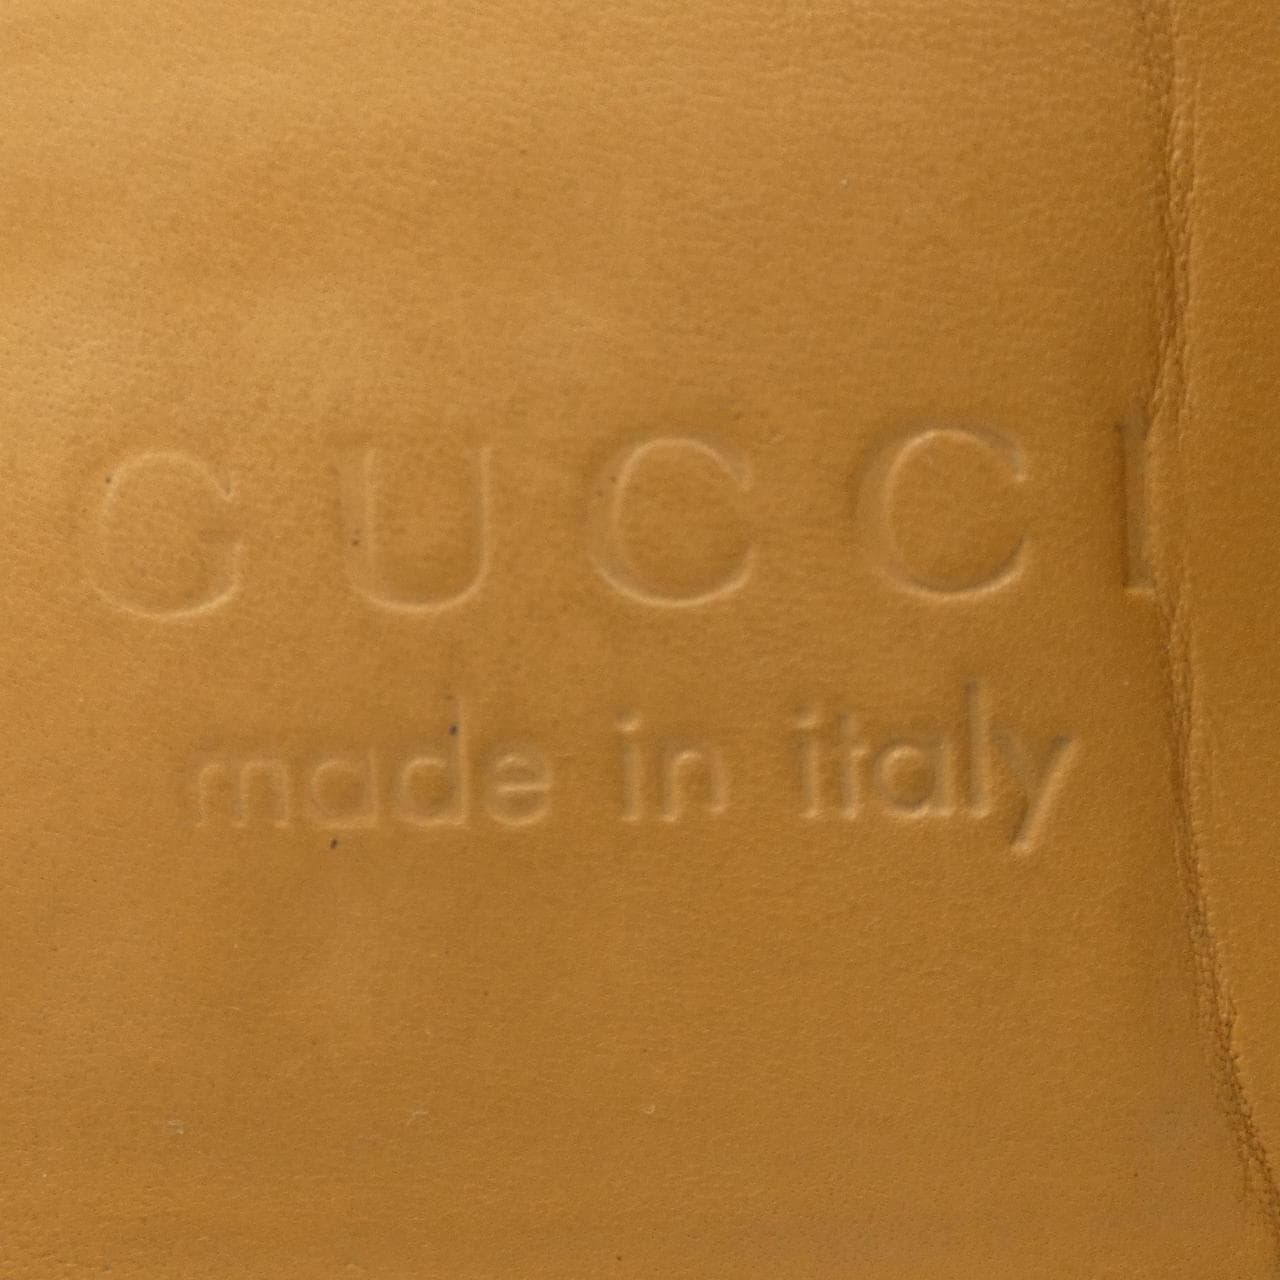 Gucci GUCCI shoes